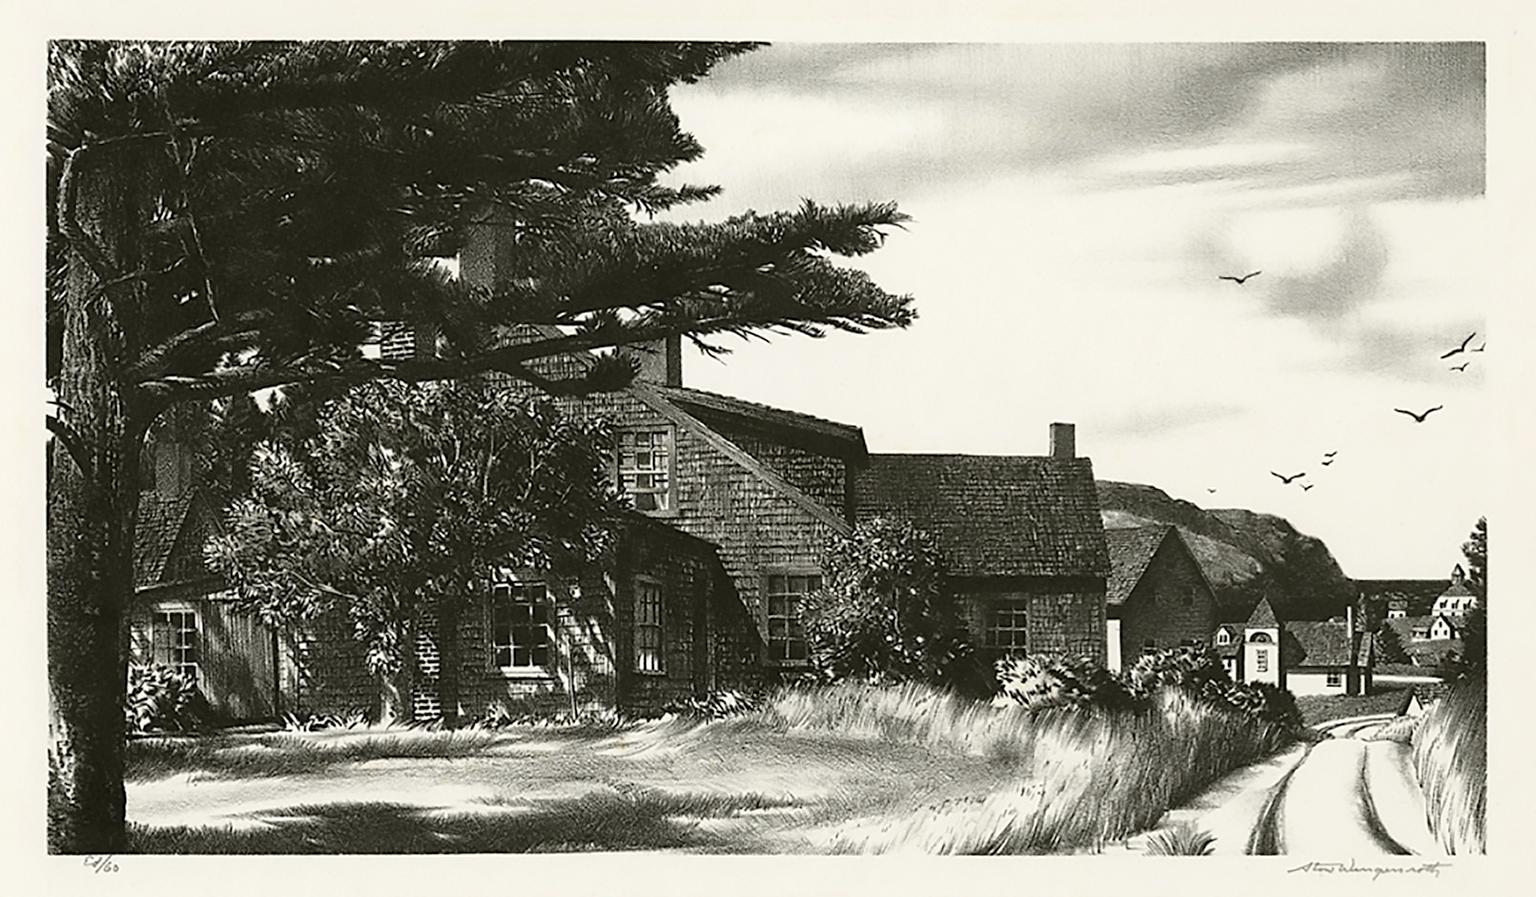 Stow Wengenroth Landscape Print - The Captain's House (Monhegan, Maine)